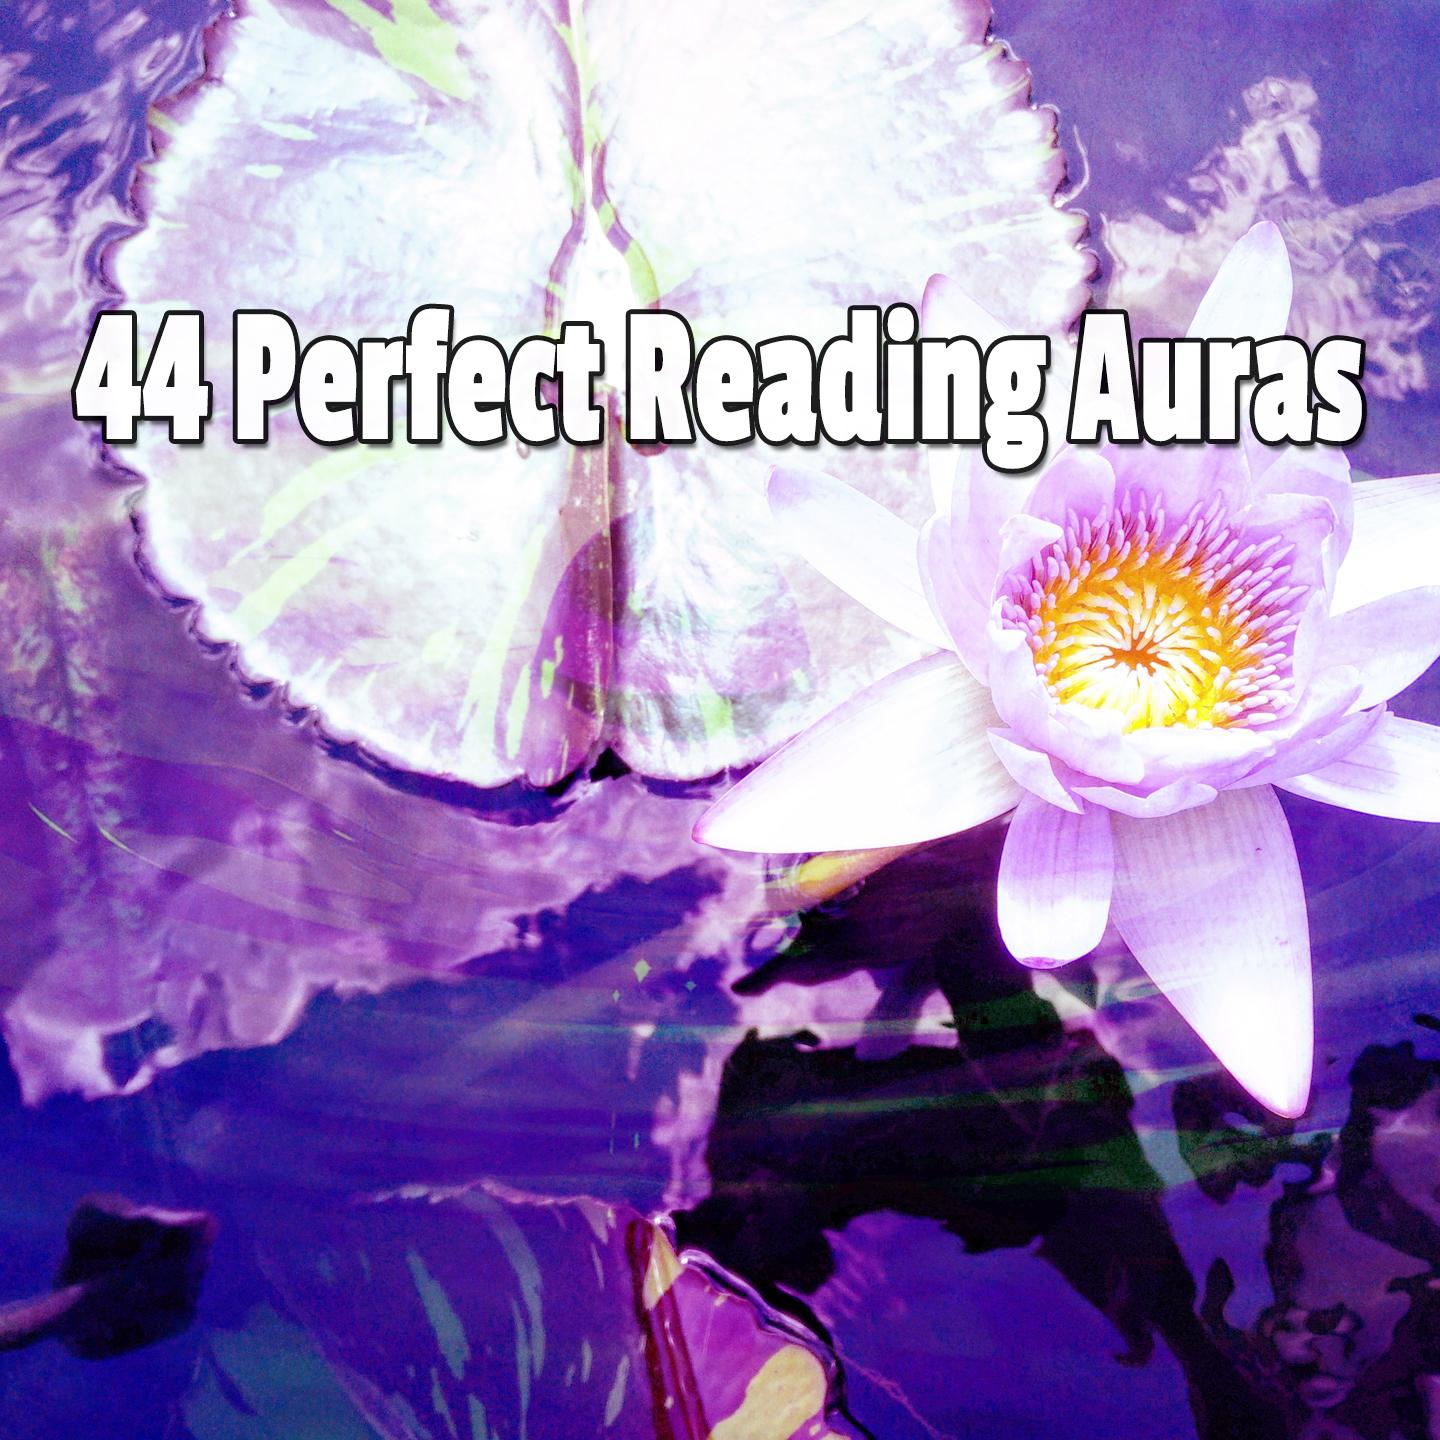 44 Perfect Reading Auras